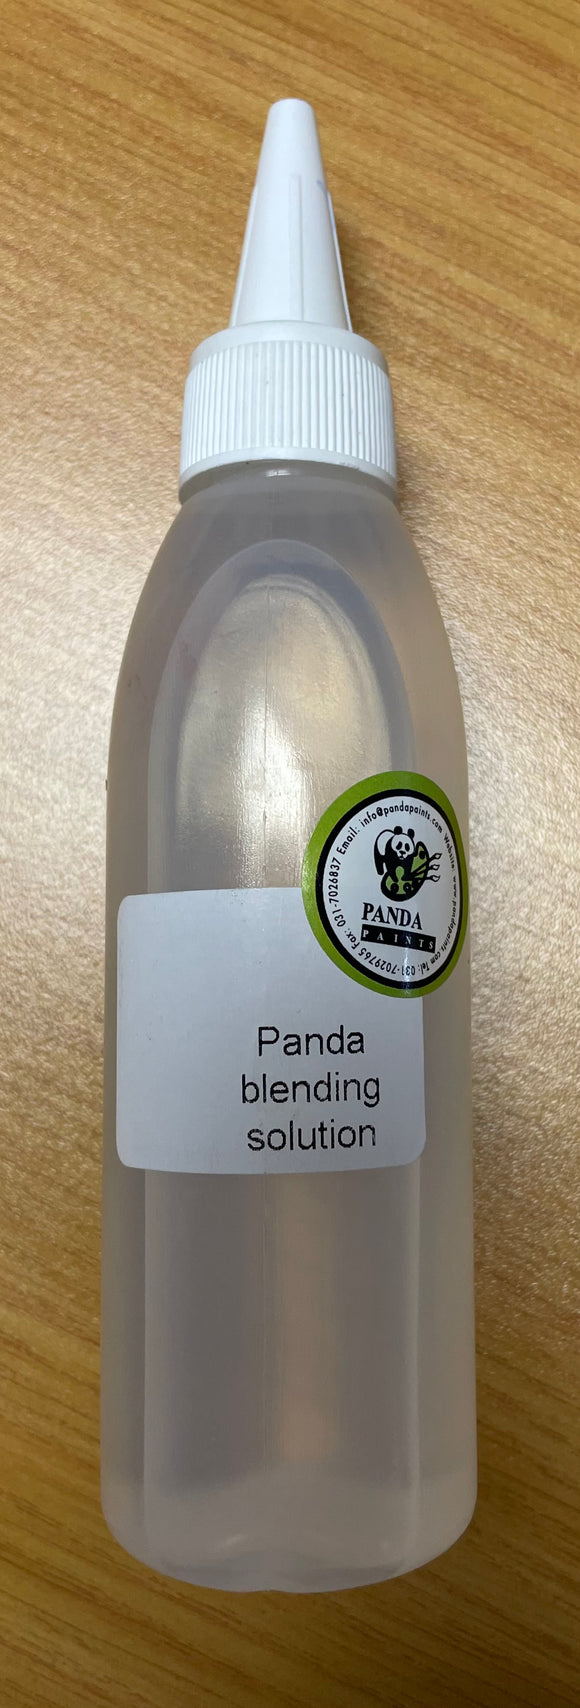 Blending solution for Alcohol Ink work – Panda Paints